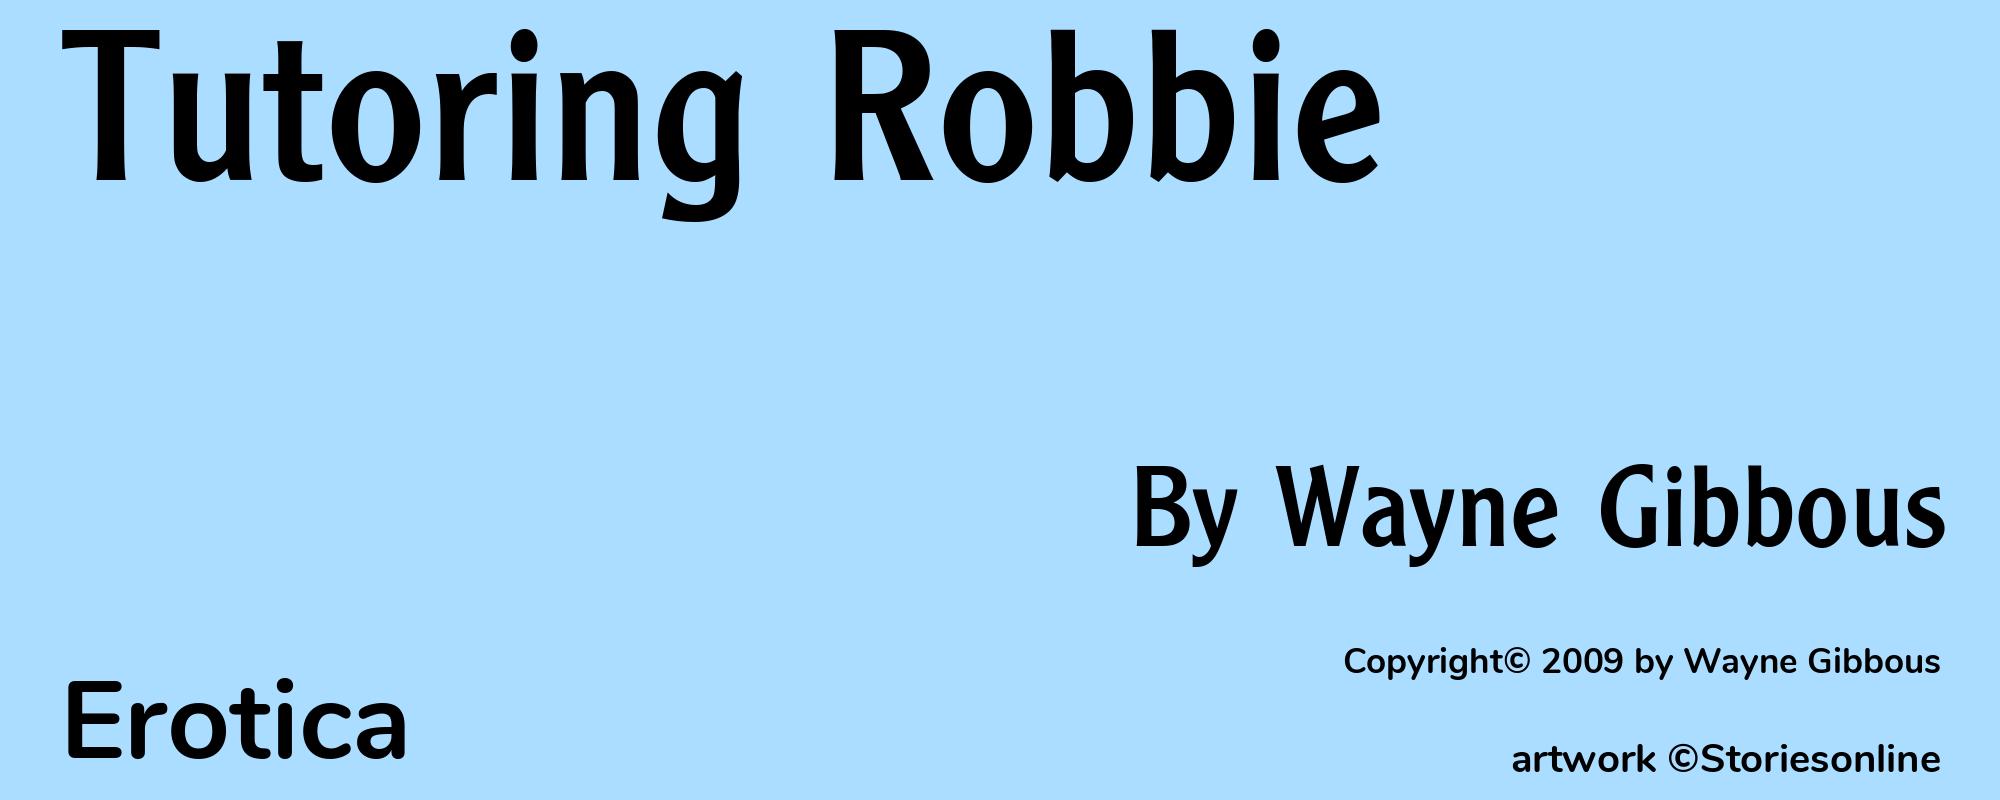 Tutoring Robbie - Cover